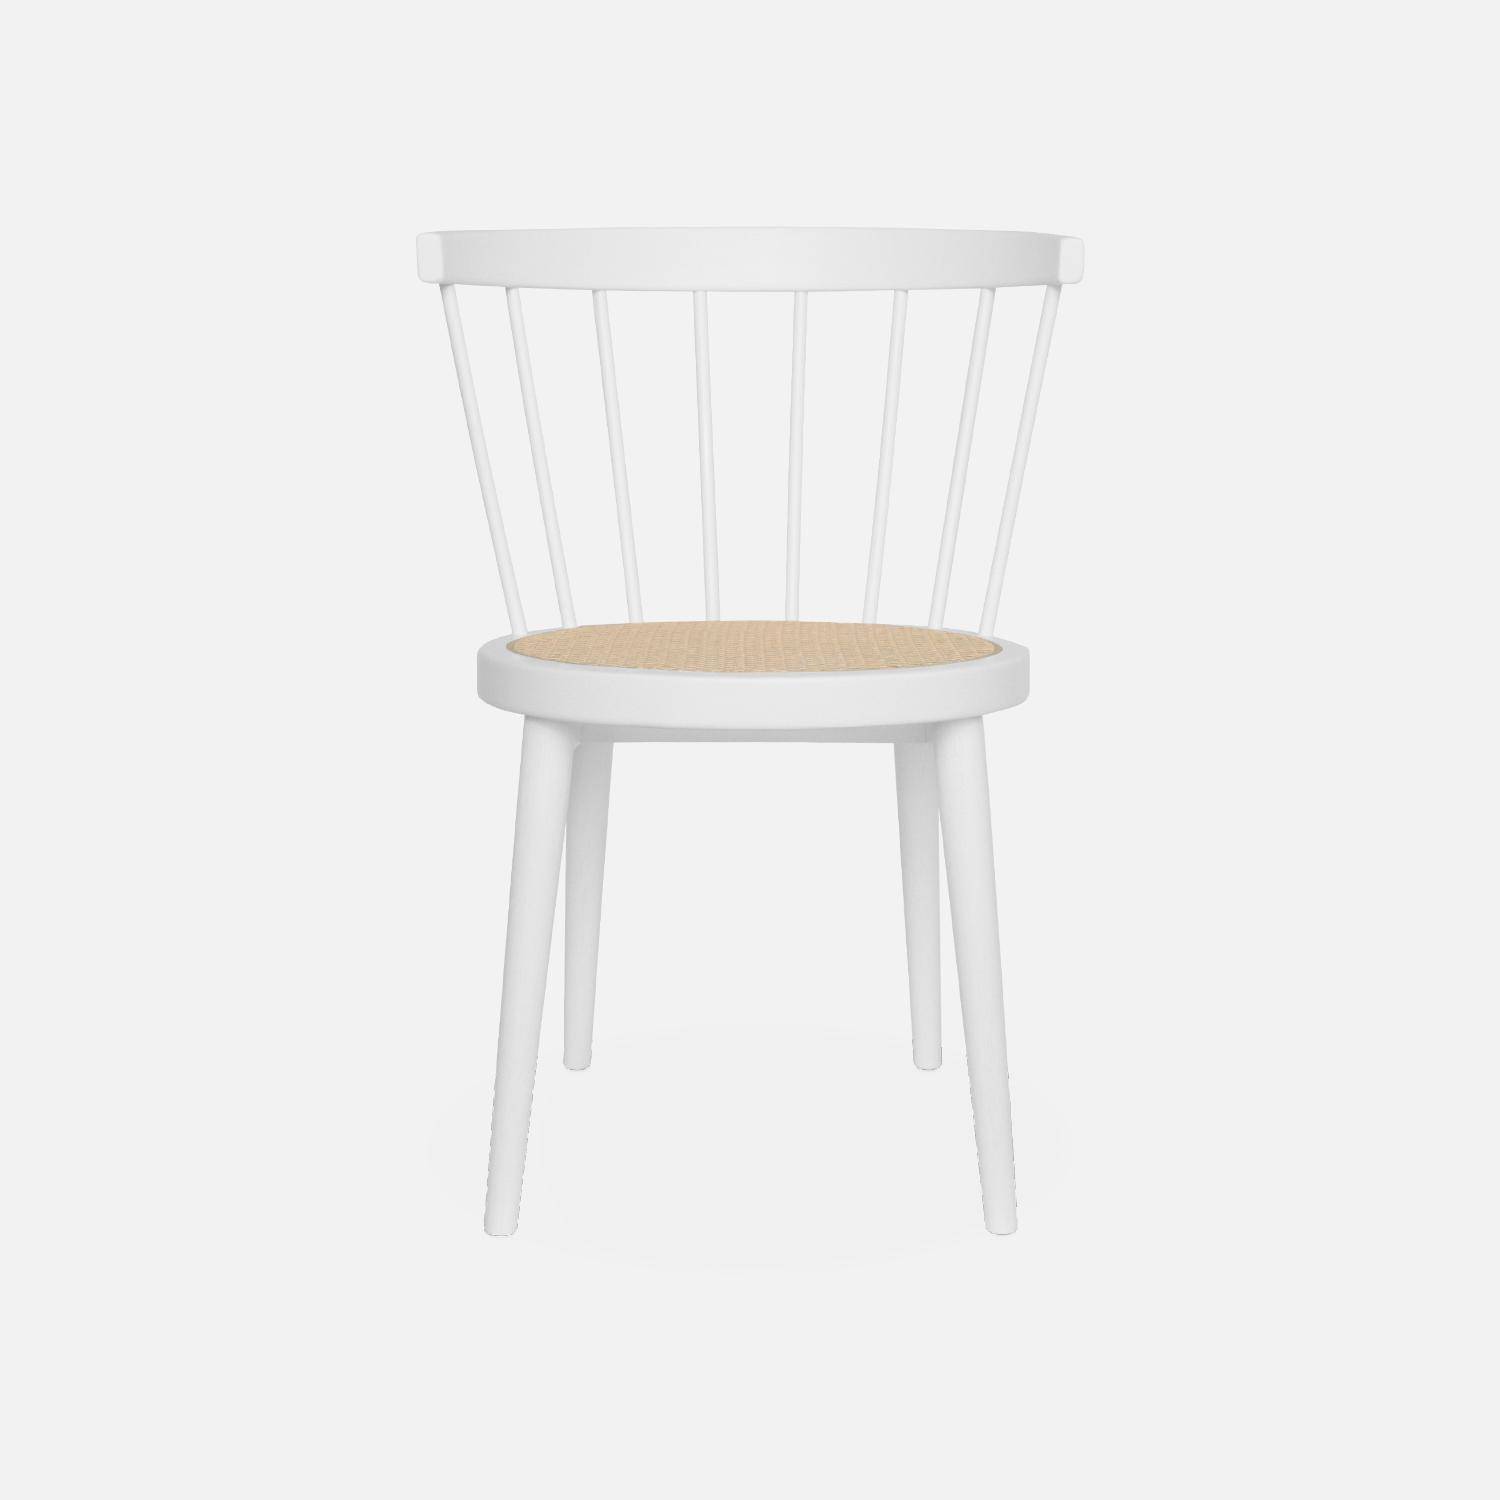 Pair of  Wood and Cane Chairs, Bohemian Spirit, White, L53 x W53.5 x H 6 cm Photo5